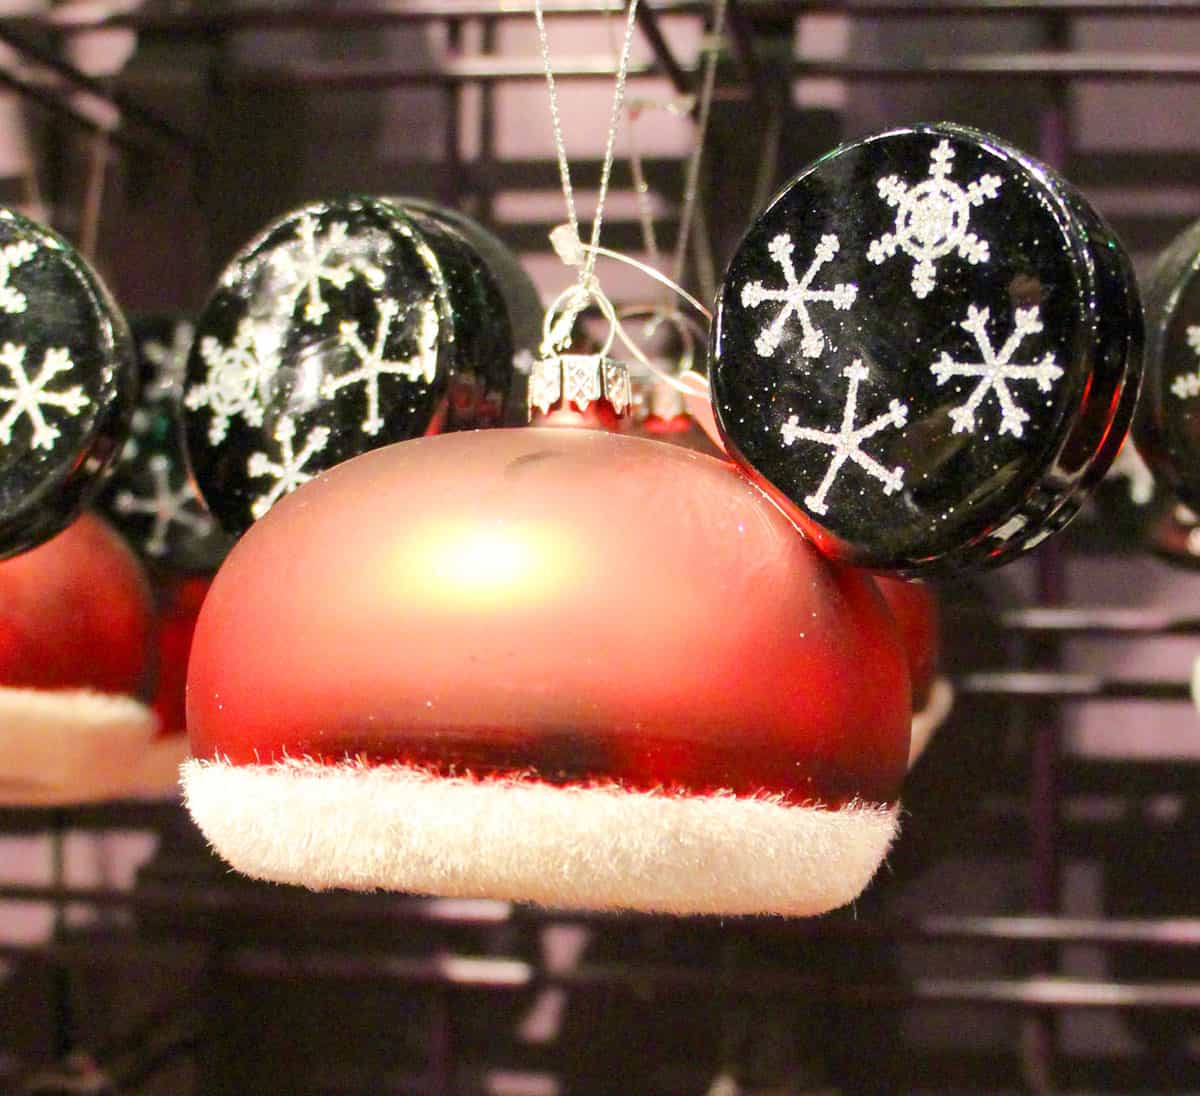 Disney Winnie Kunststoff h10 cm Ornament Weihnachtskugel I Kurt S